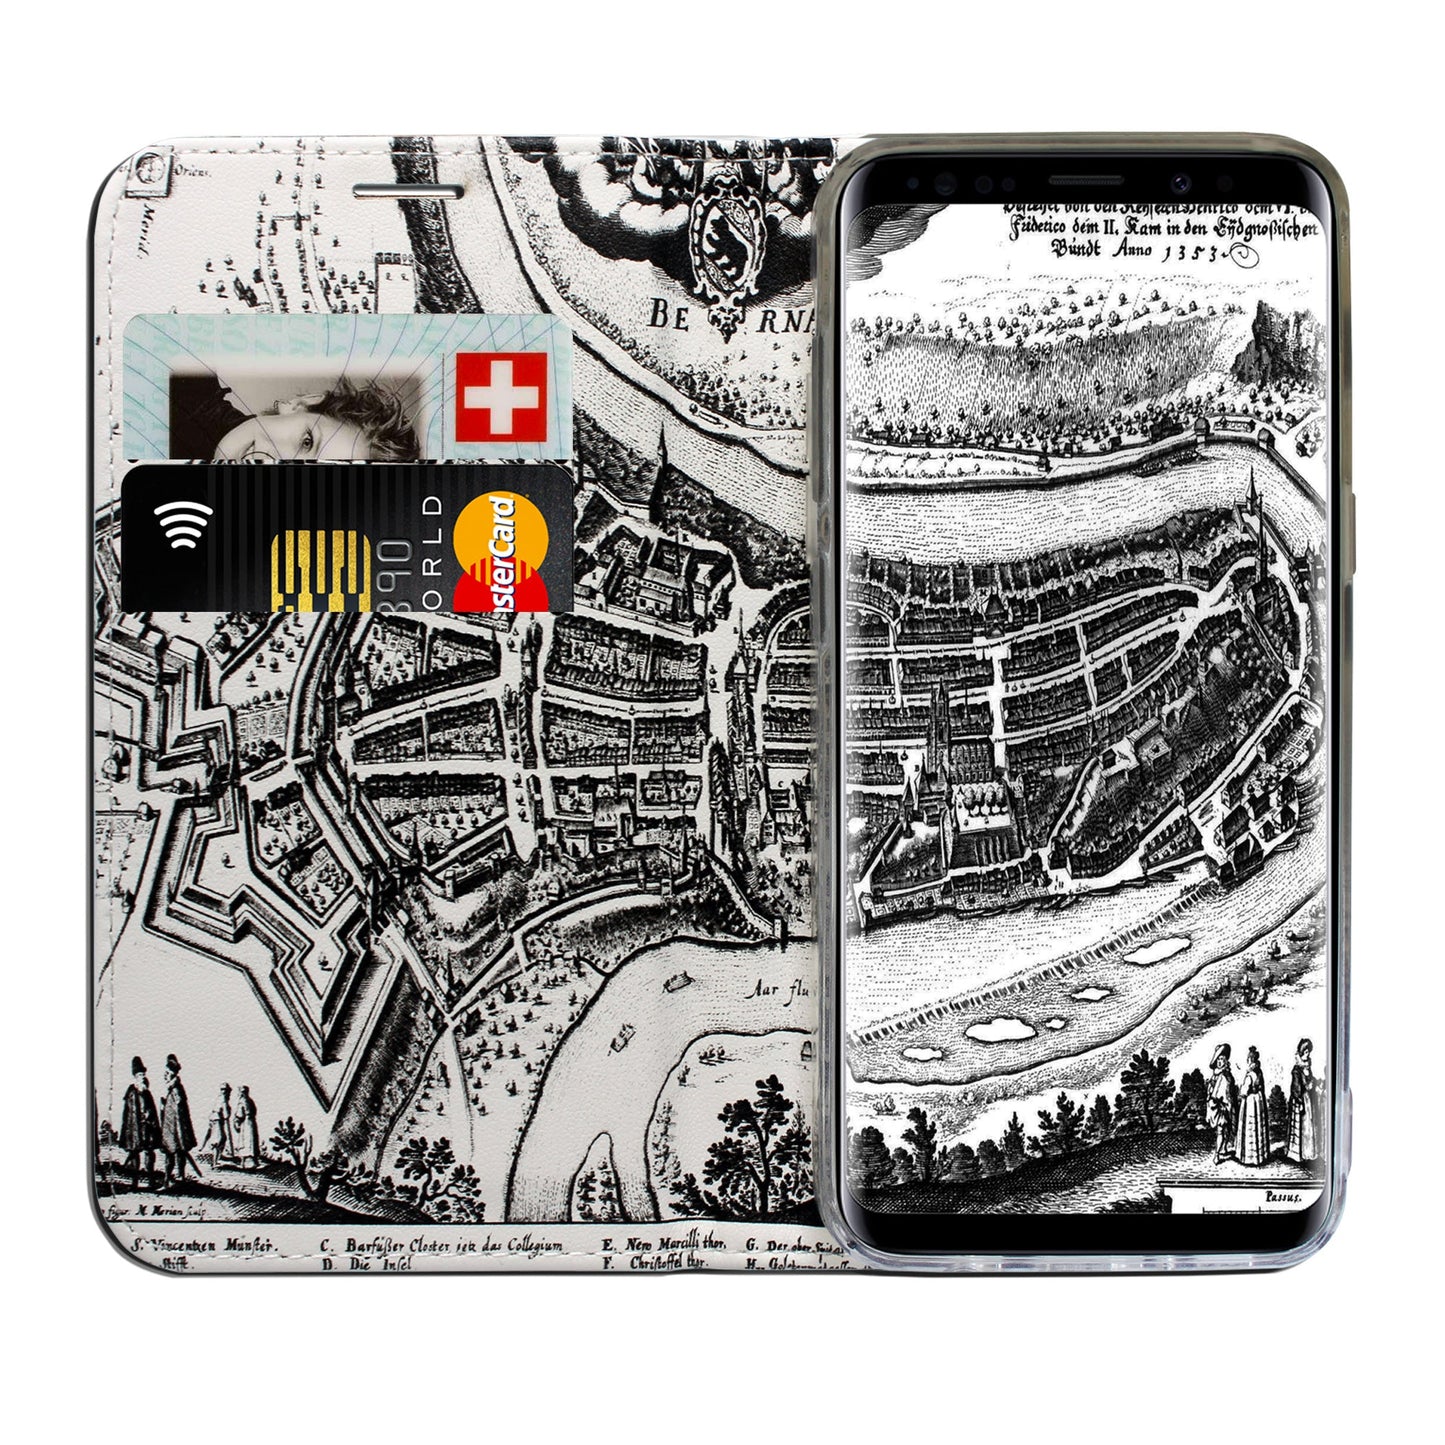 Bern Merian Panorama Case for Samsung Galaxy Note 8